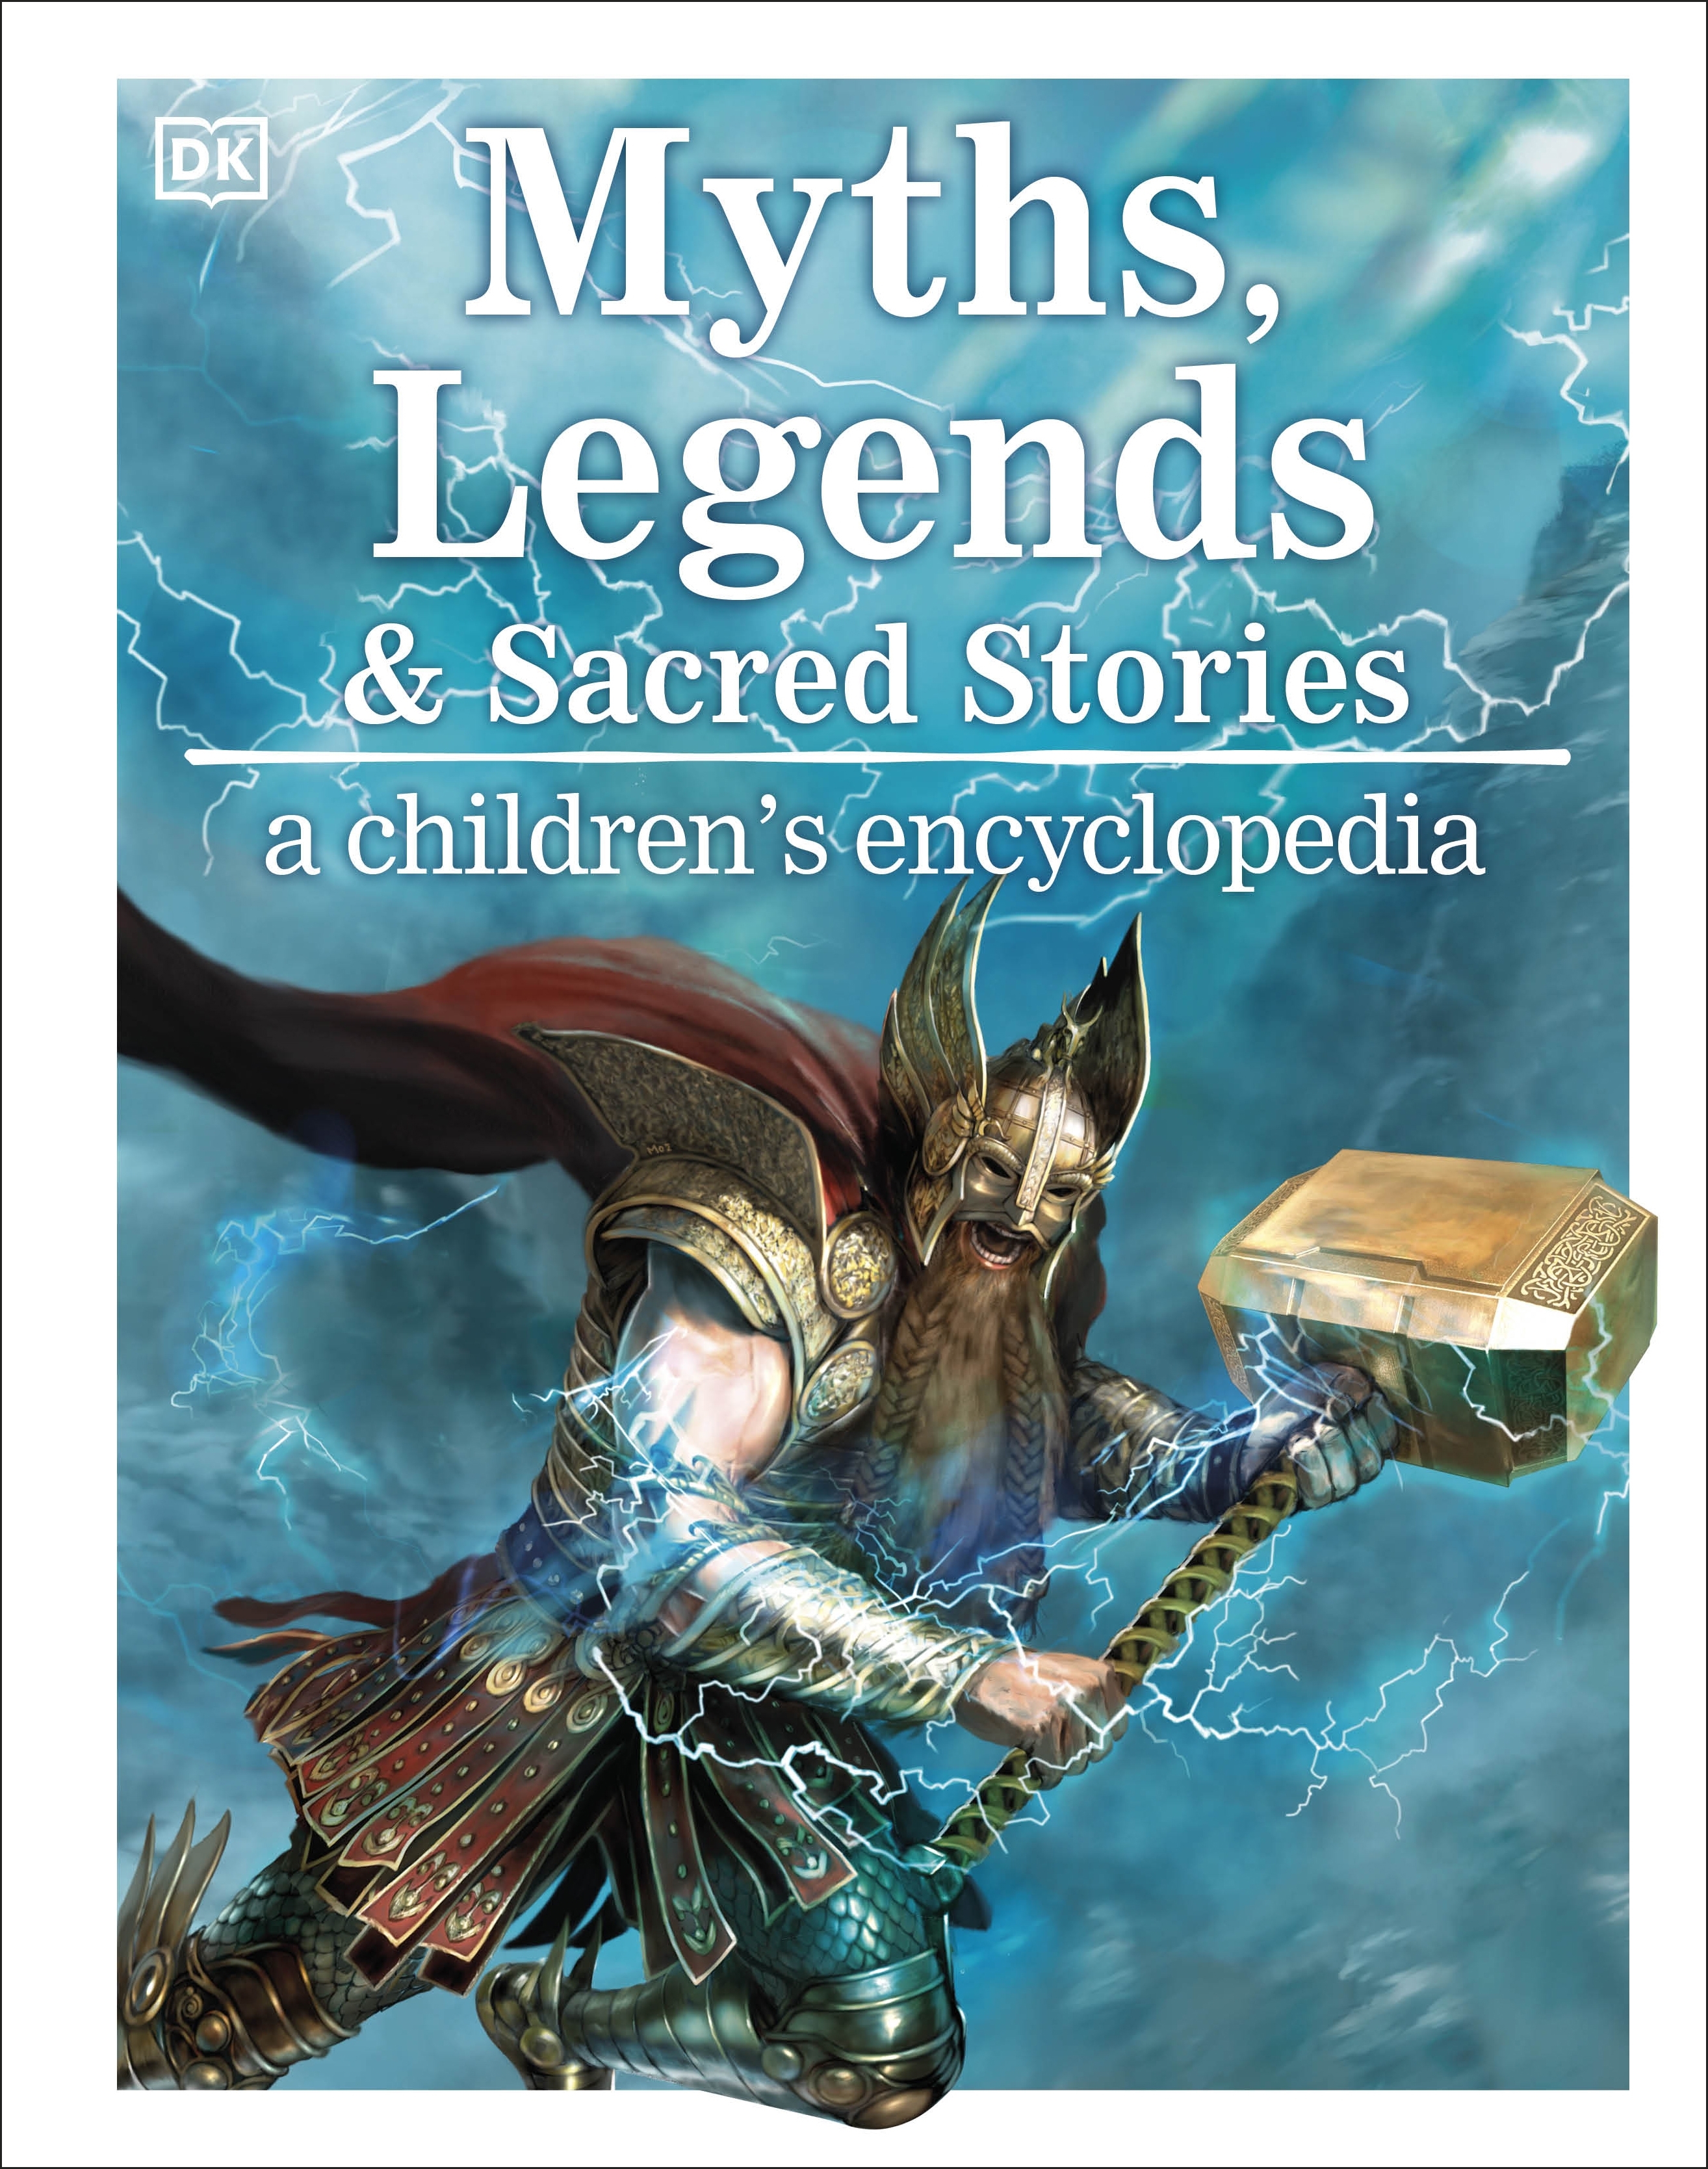 Myths Legends And Sacred Stories By Dk Penguin Books Australia